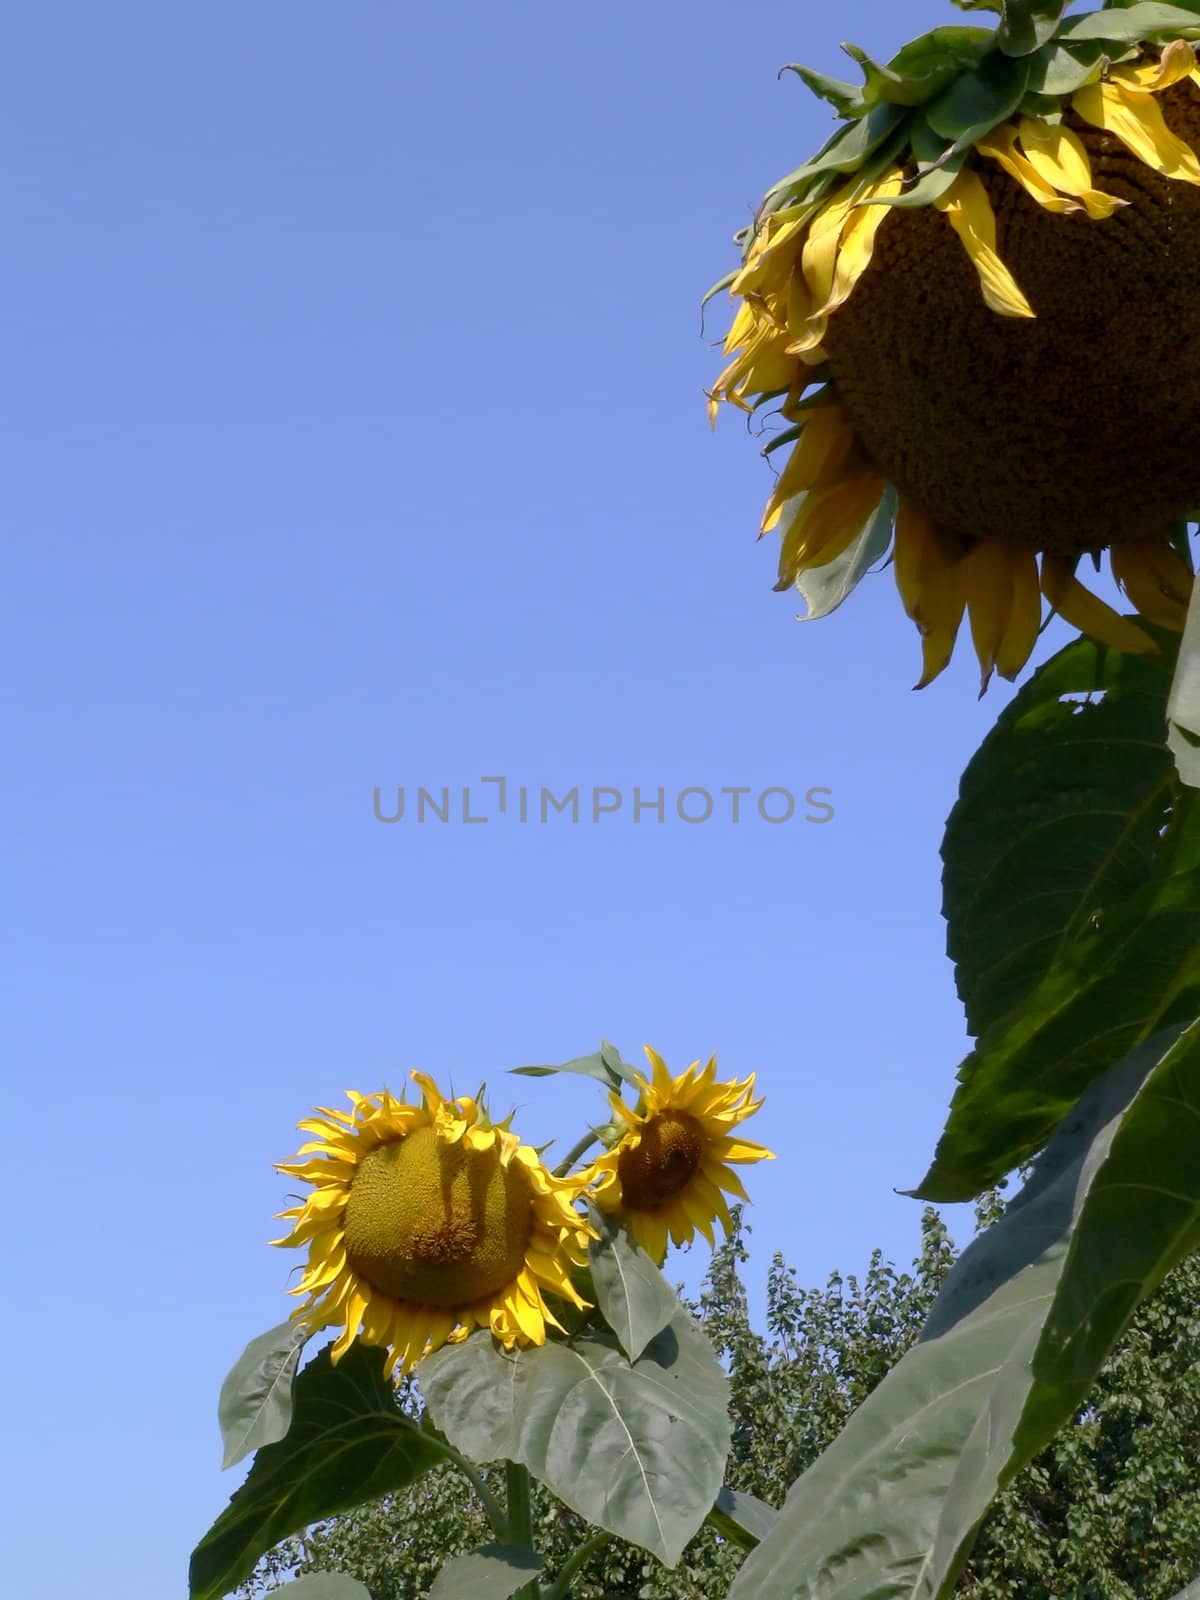 Sunflowers 2 by ichip